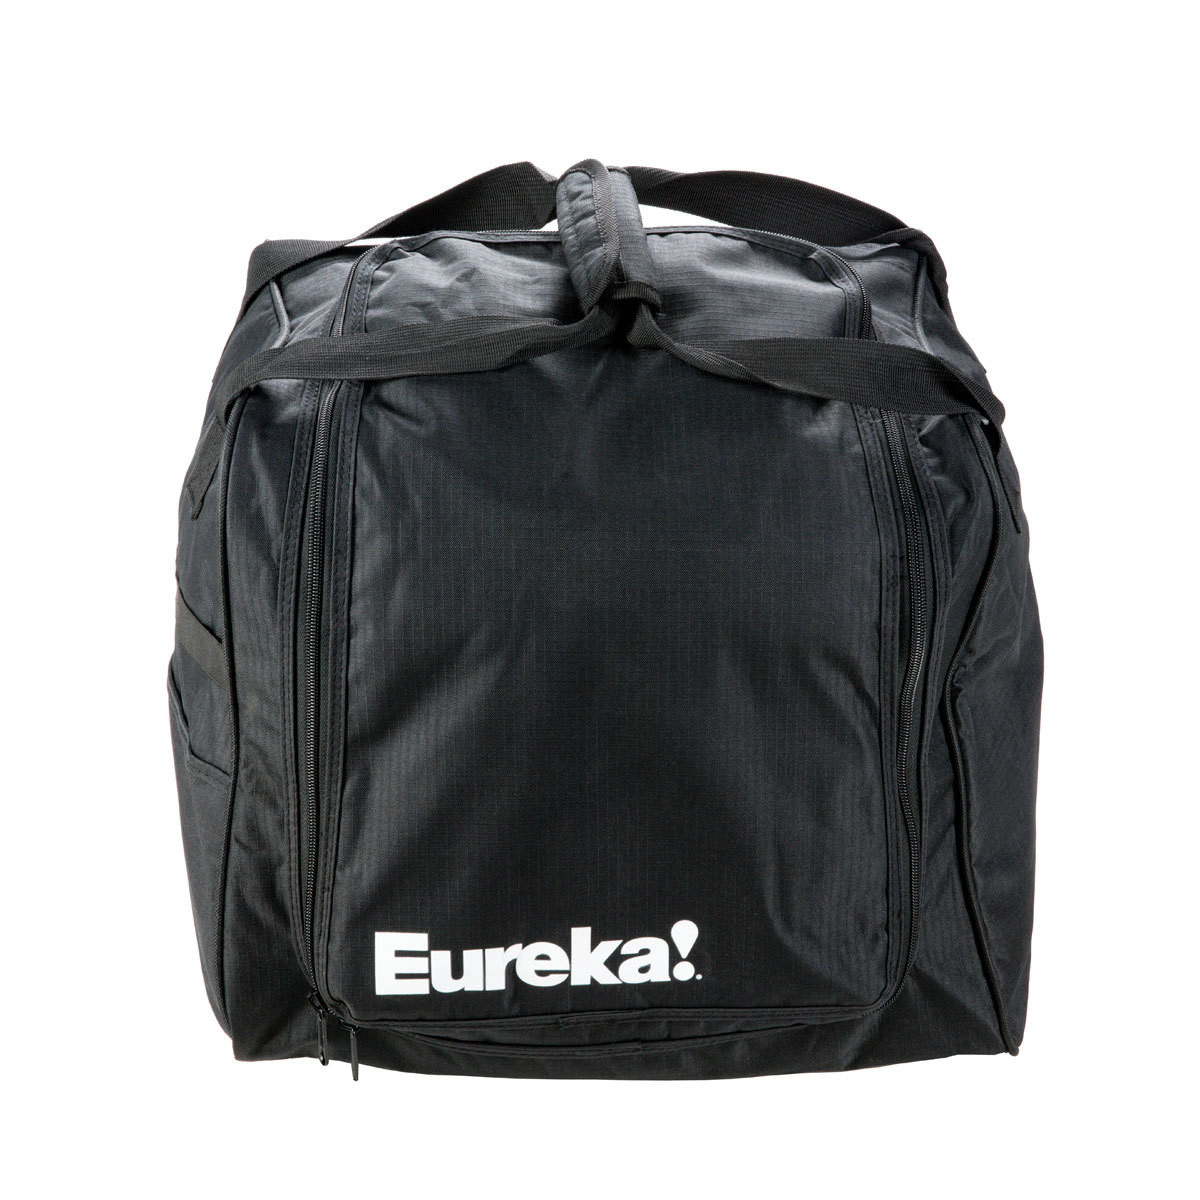 Eureka Gonzo Carry Bag